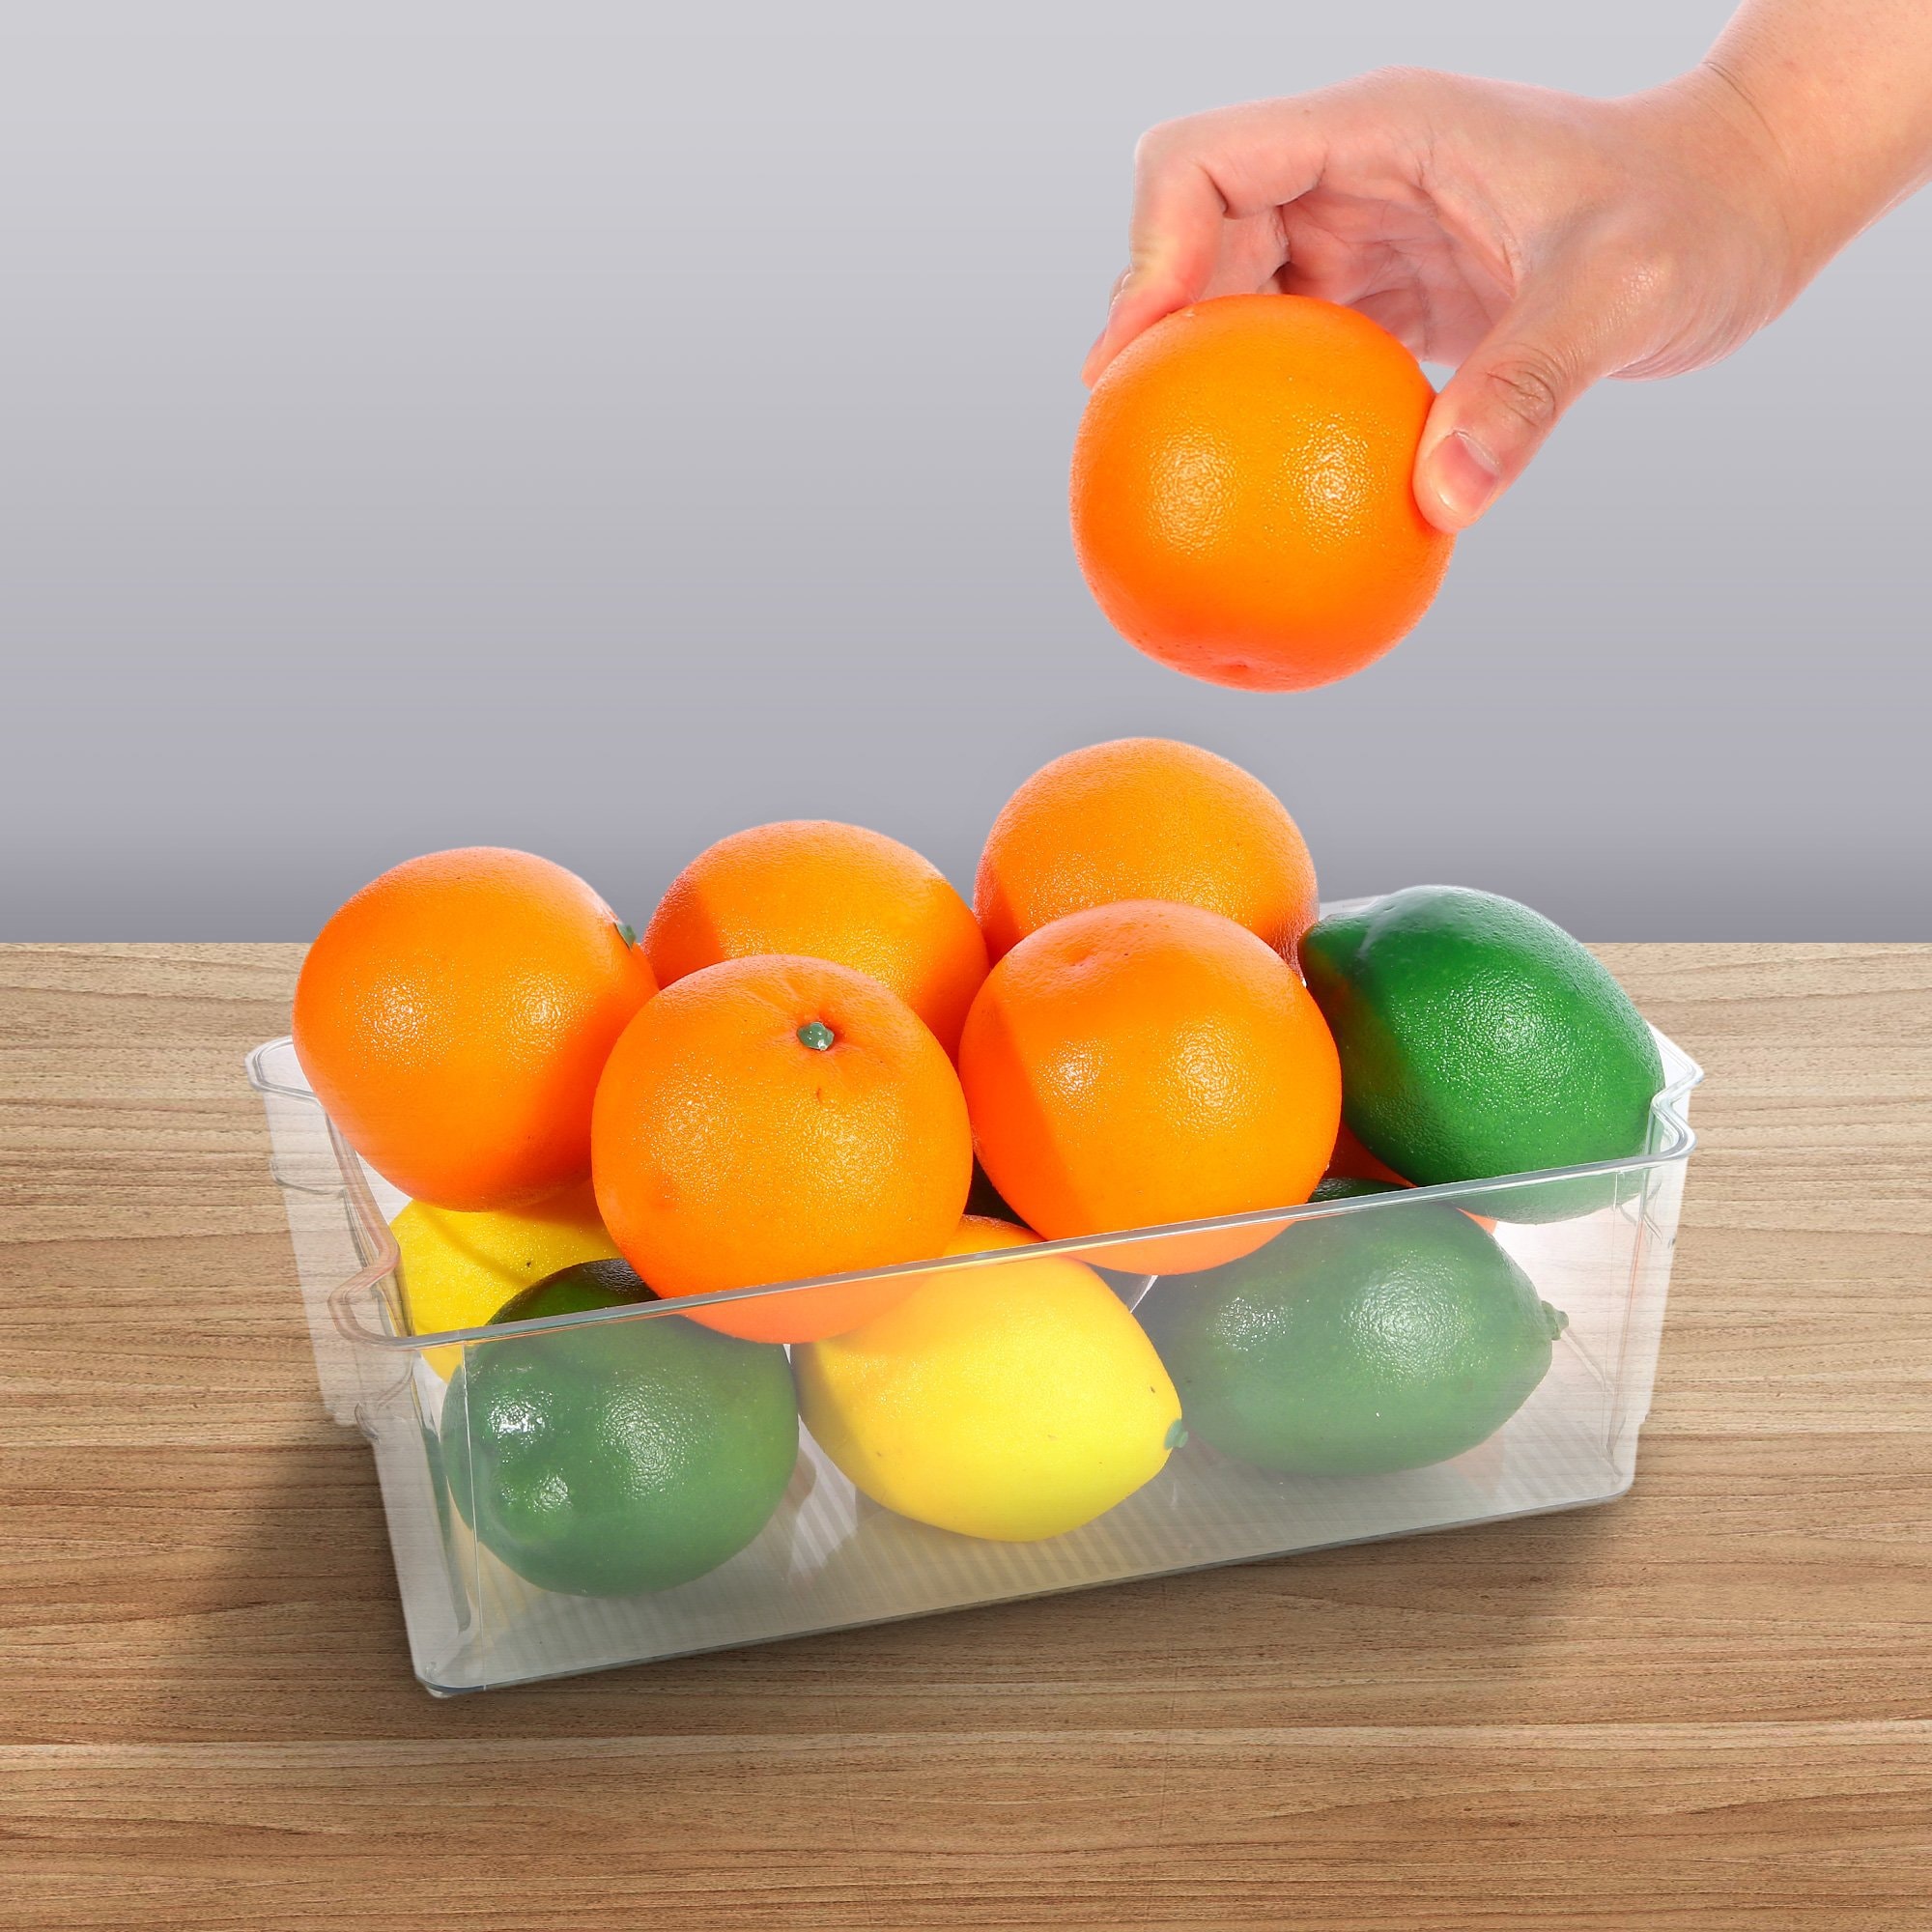 ROSELIFE 飲品蔬果分類廚房冰箱收納盒 11.8"x6.3"x3.5" 2裝